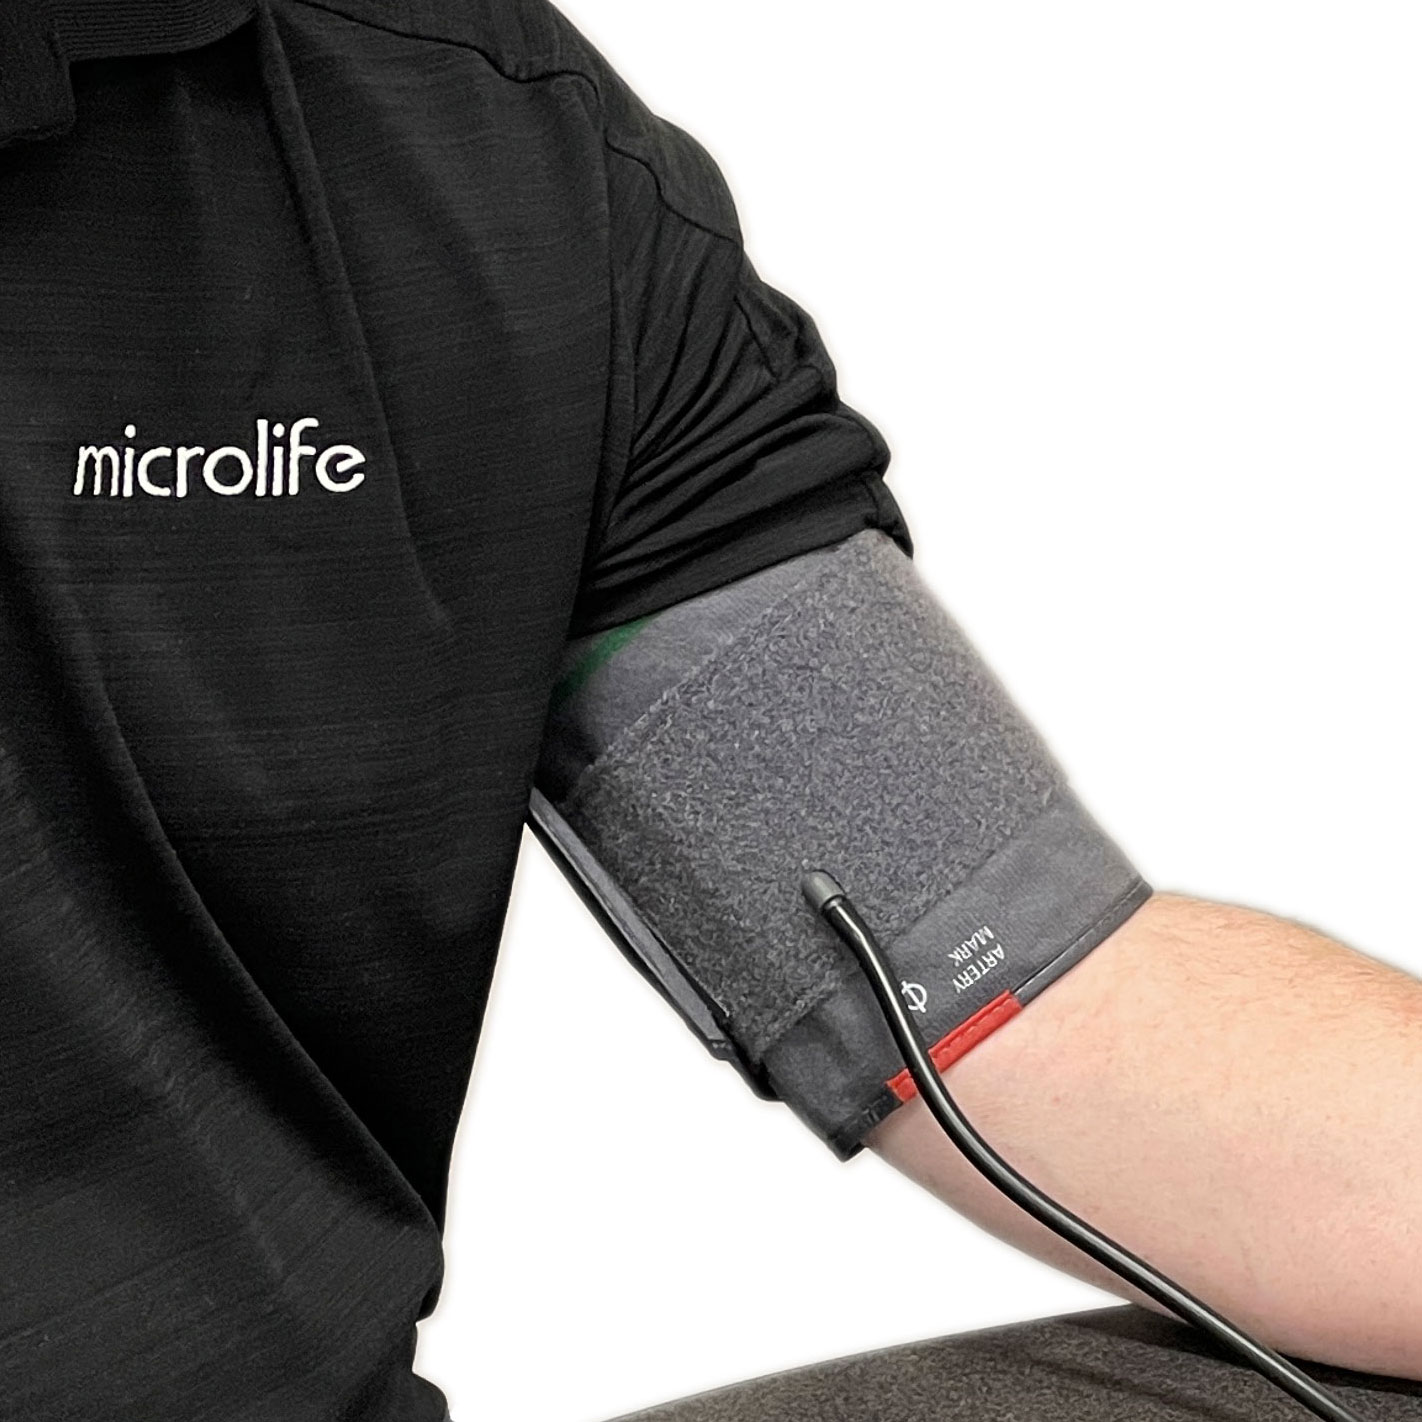 Microlife Bluetooth Digital Blood Pressure Monitor, Upper Arm Cuff, BPM8